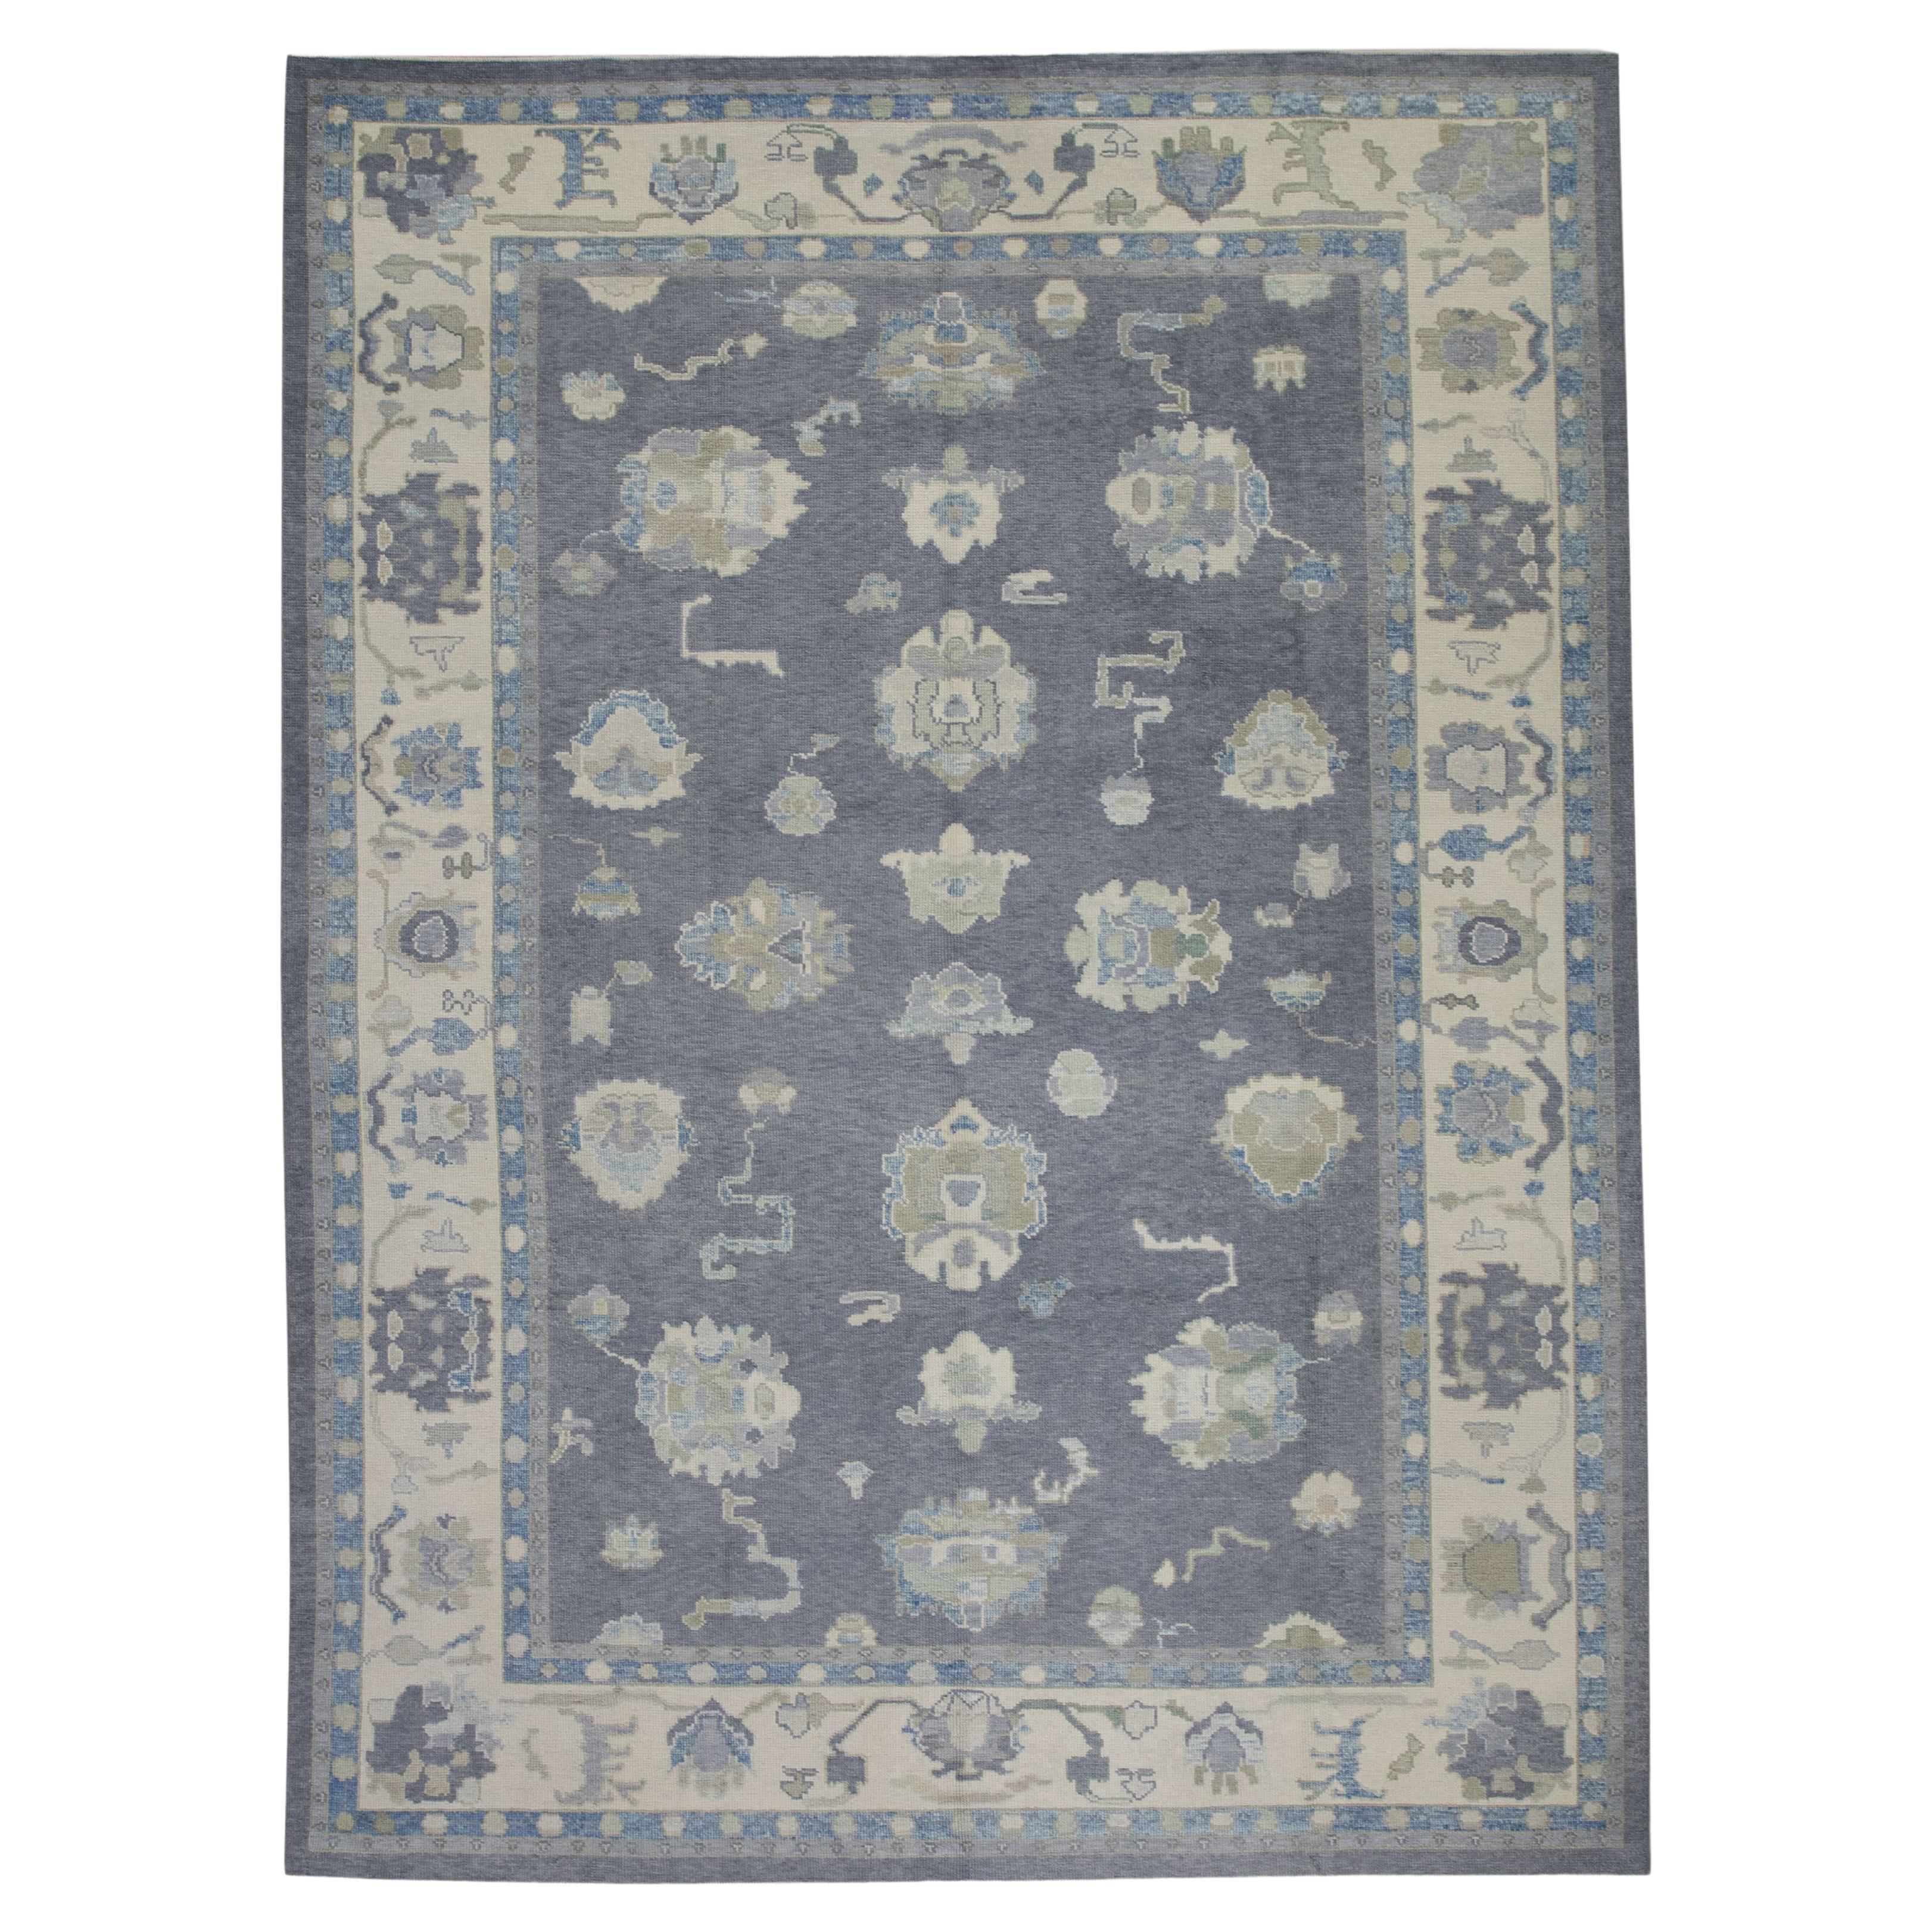 Gray & Blue Floral Design Handwoven Wool Turkish Oushak Rug 9' X 11'10" For Sale